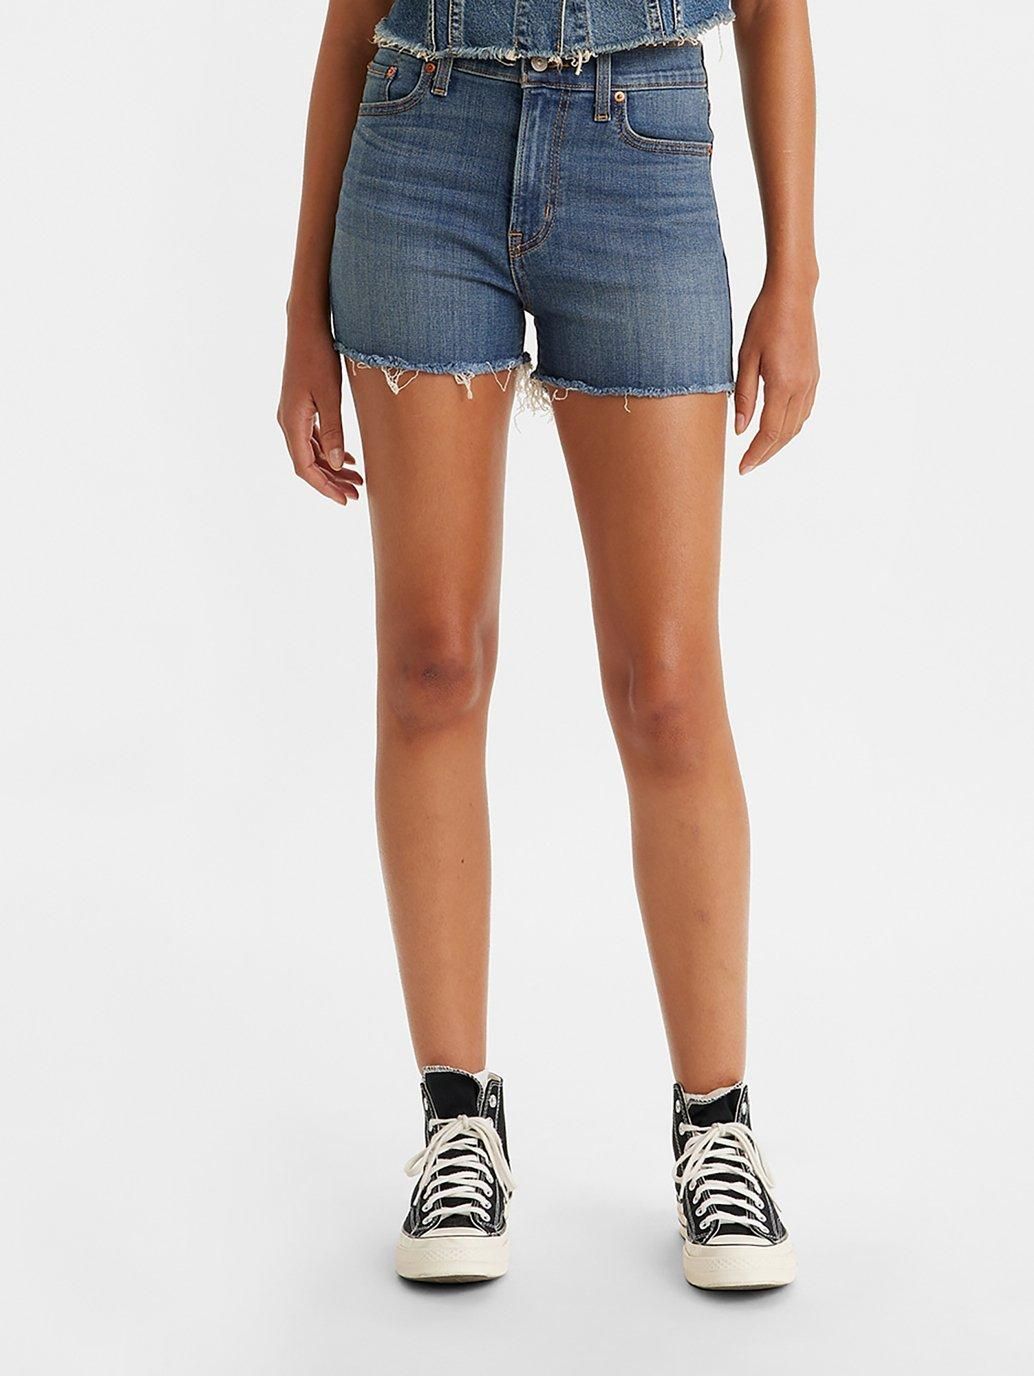 Levi's - Quần jeans ngắn nữ Women's High-Rise Denim Shorts